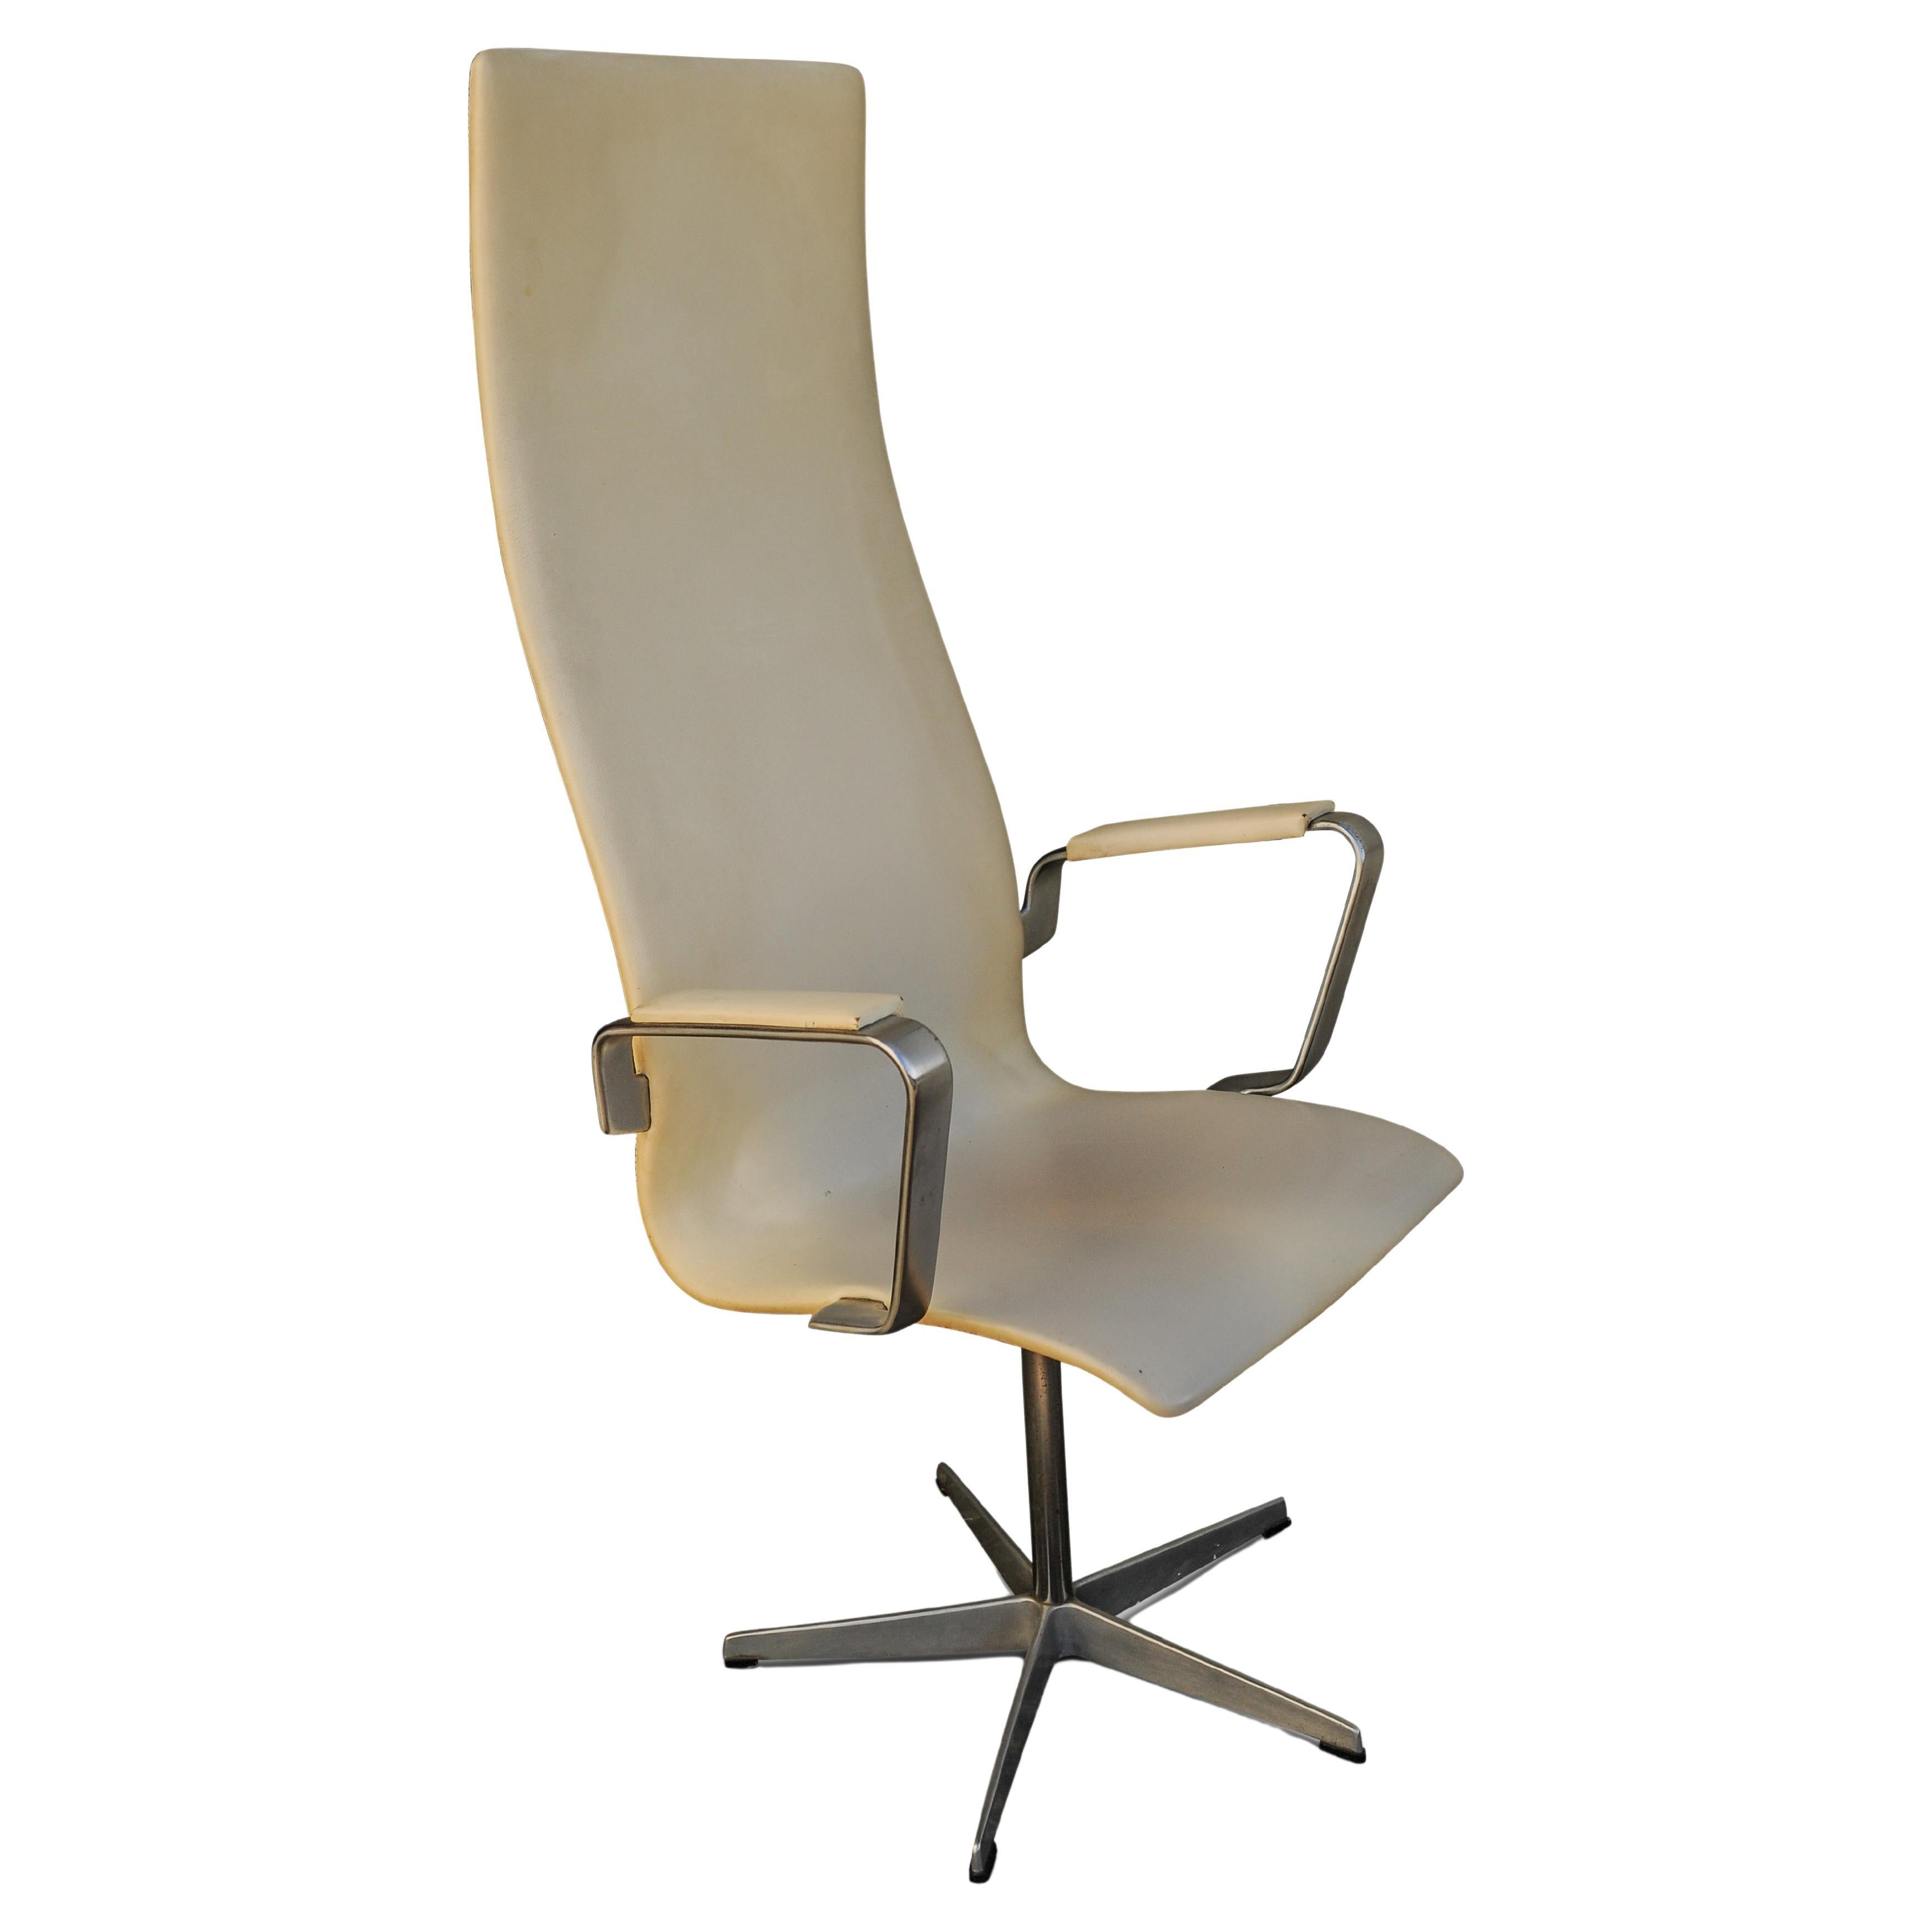  Arne Jacobsen for Fritz Hansen An Original 1970's Cream Leather "Oxford" Chair For Sale